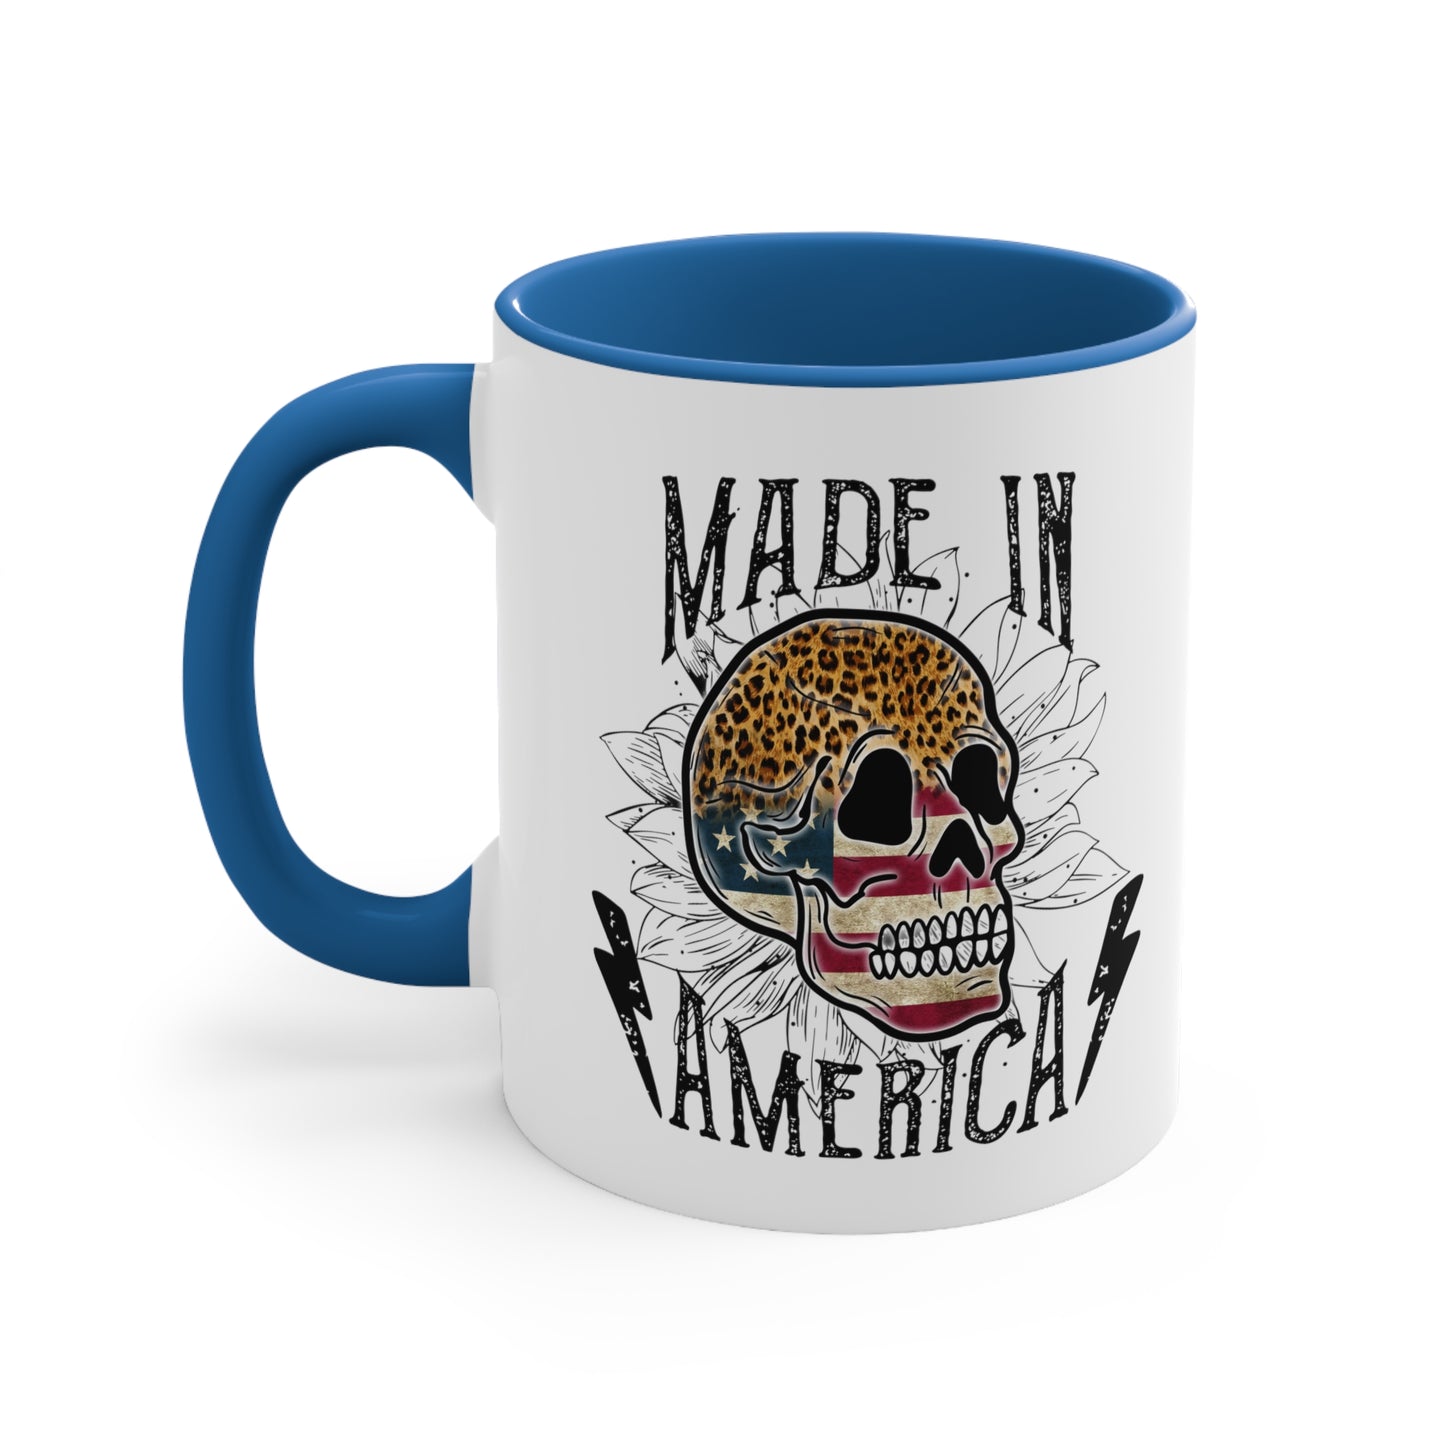 Made In America Skull Accent Coffee Mug, 11oz